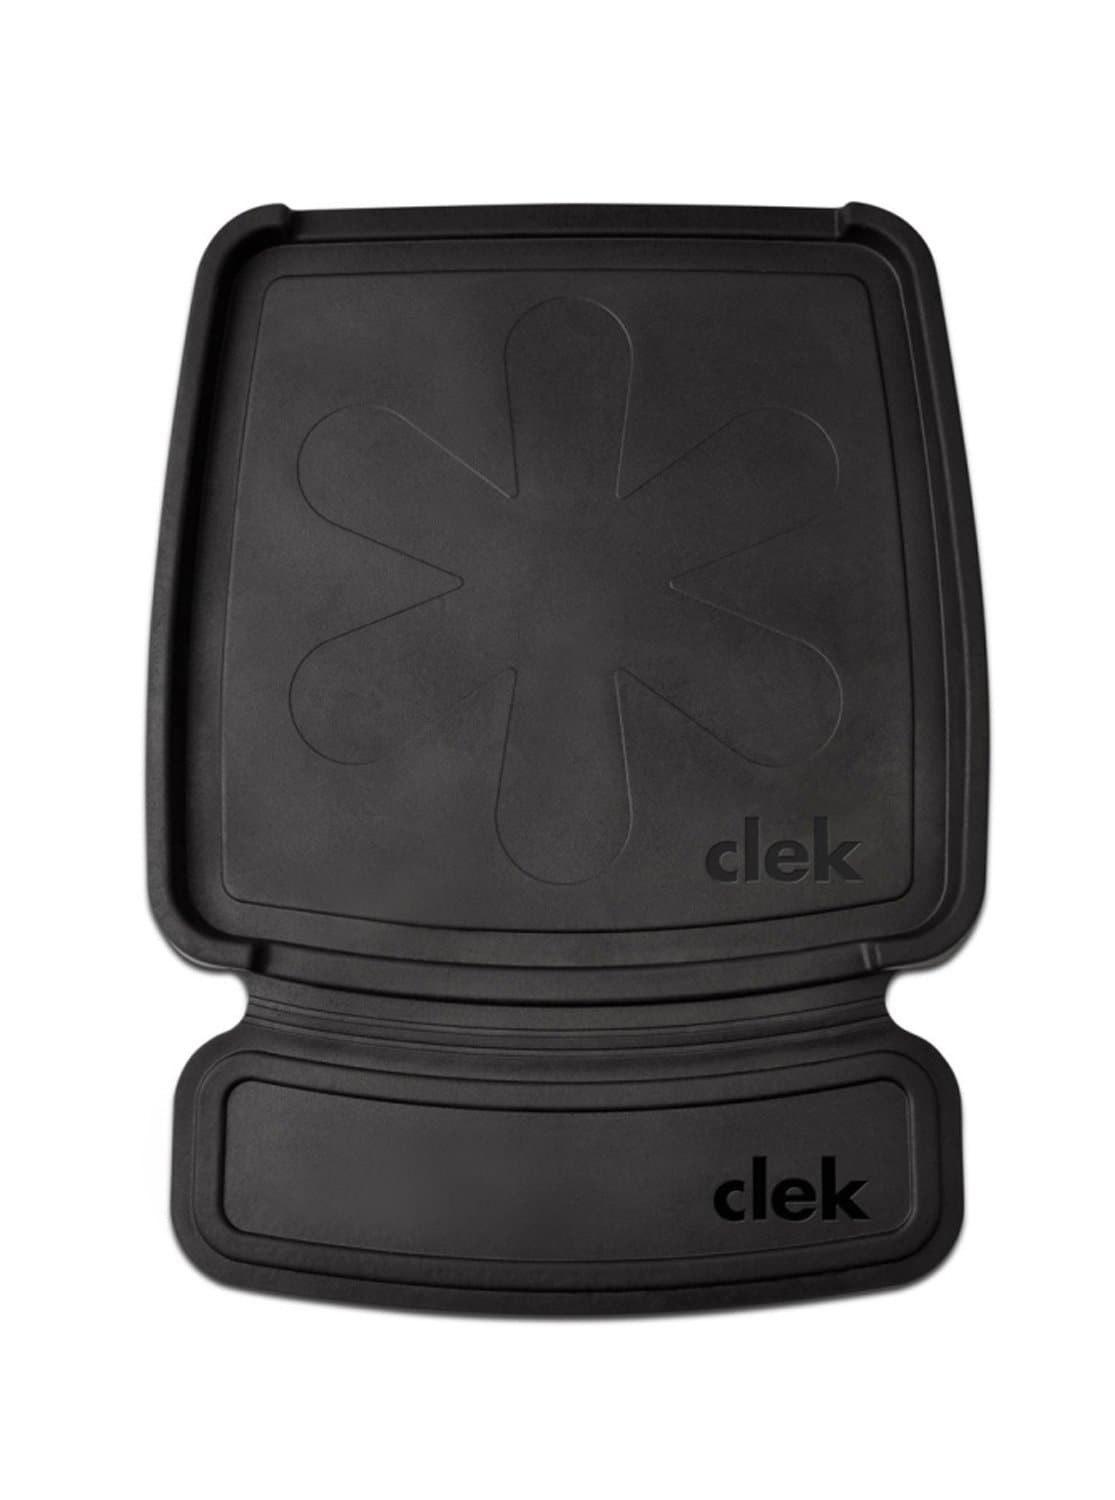 CLEK Mat-Thingy Car Seat Protector - Black - ANB Baby -$20 - $50